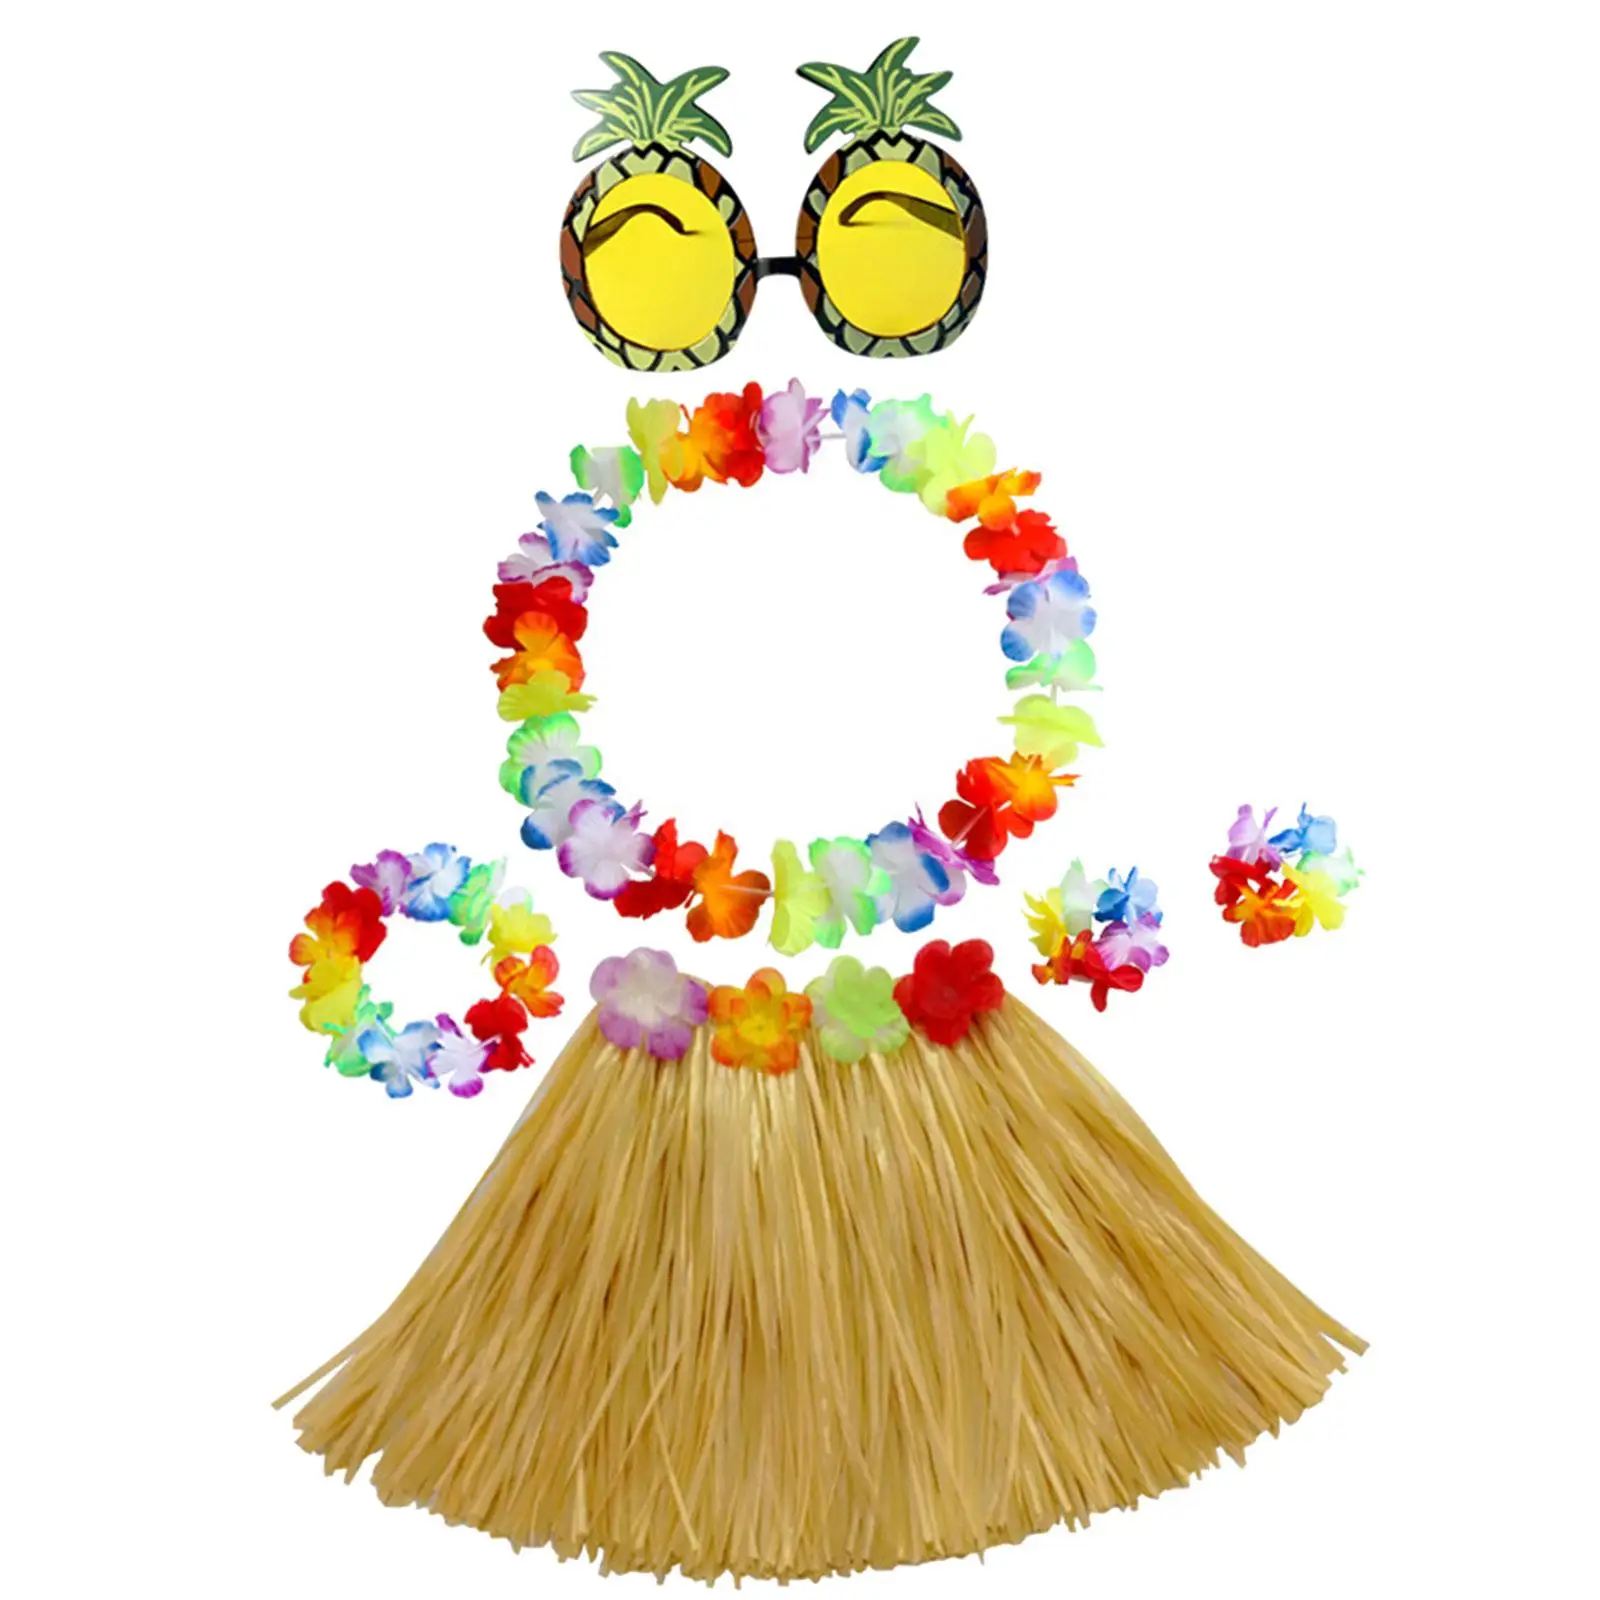 Hawaiian Grass Skirt with with Flower Wreath 30cm Short Skirt Pineapple Glasses for Summer Beach Birthday Decorations Supplies